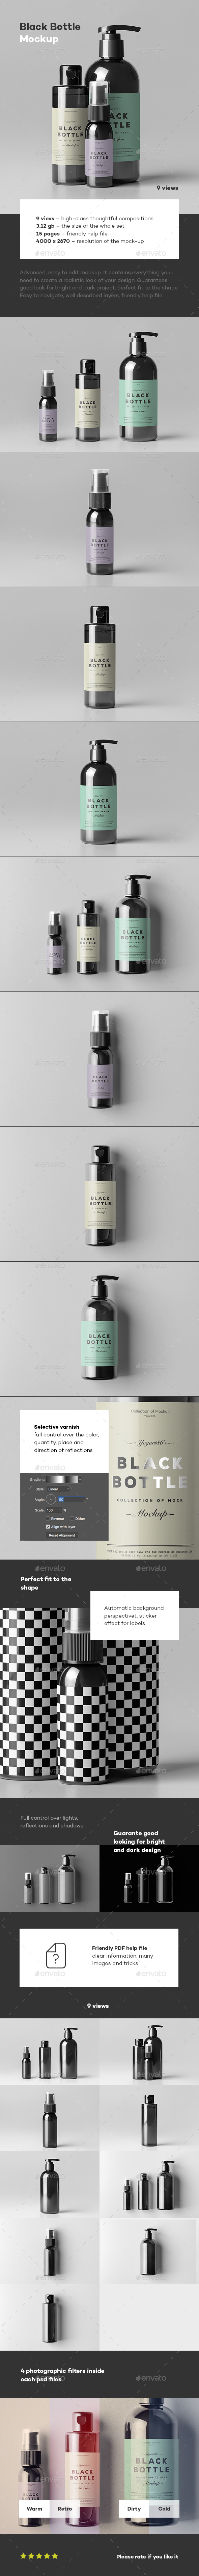 Download Black Bottles Cosmetic Mockup By Yogurt86 Graphicriver